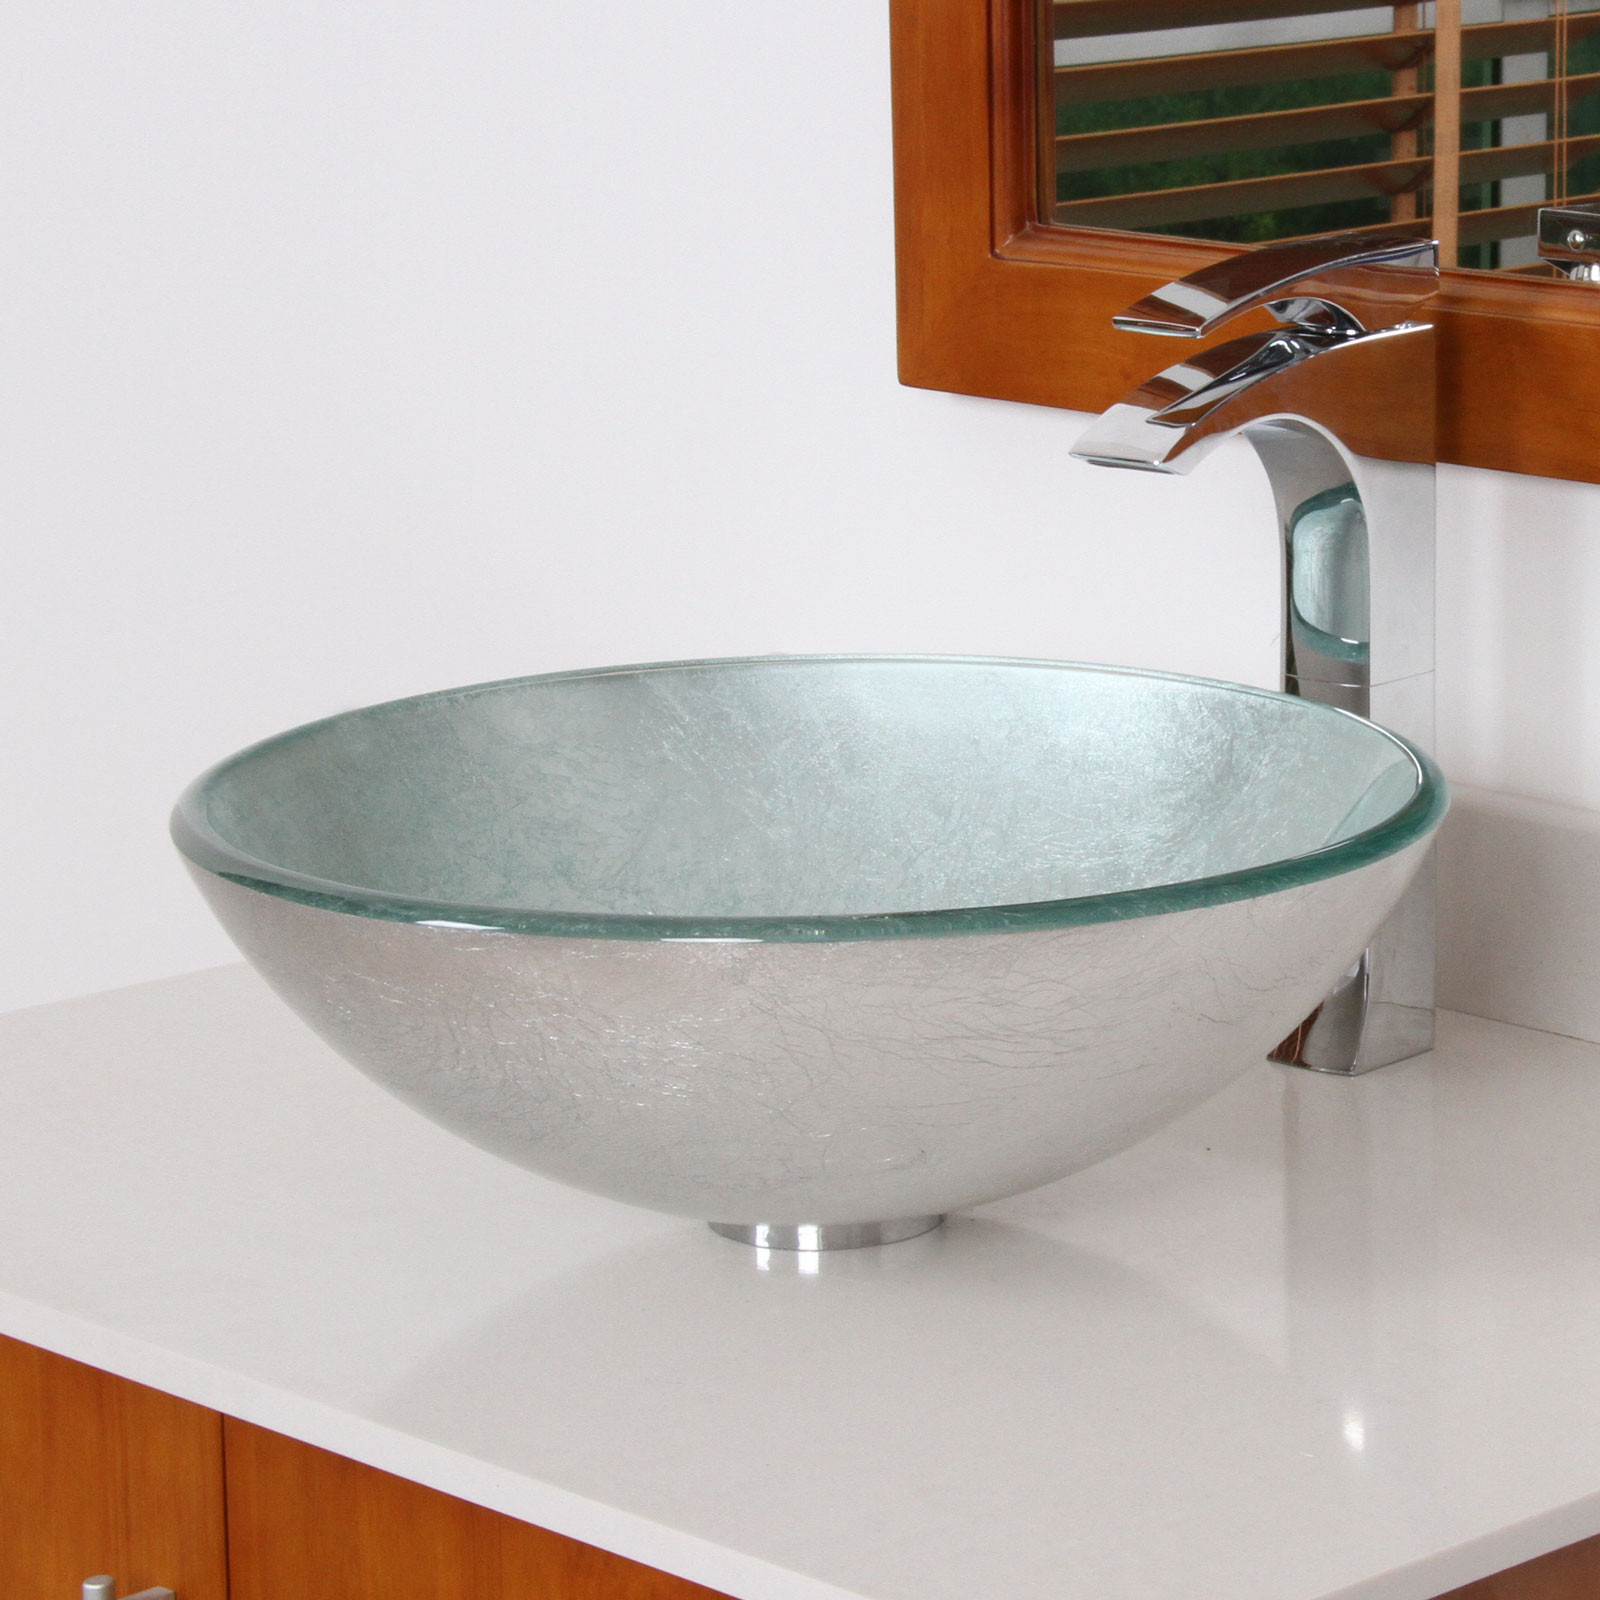 Bathroom Vessel Sinks
 ELITE 1308 Modern Tempered Glass Bathroom Vessel Sink With